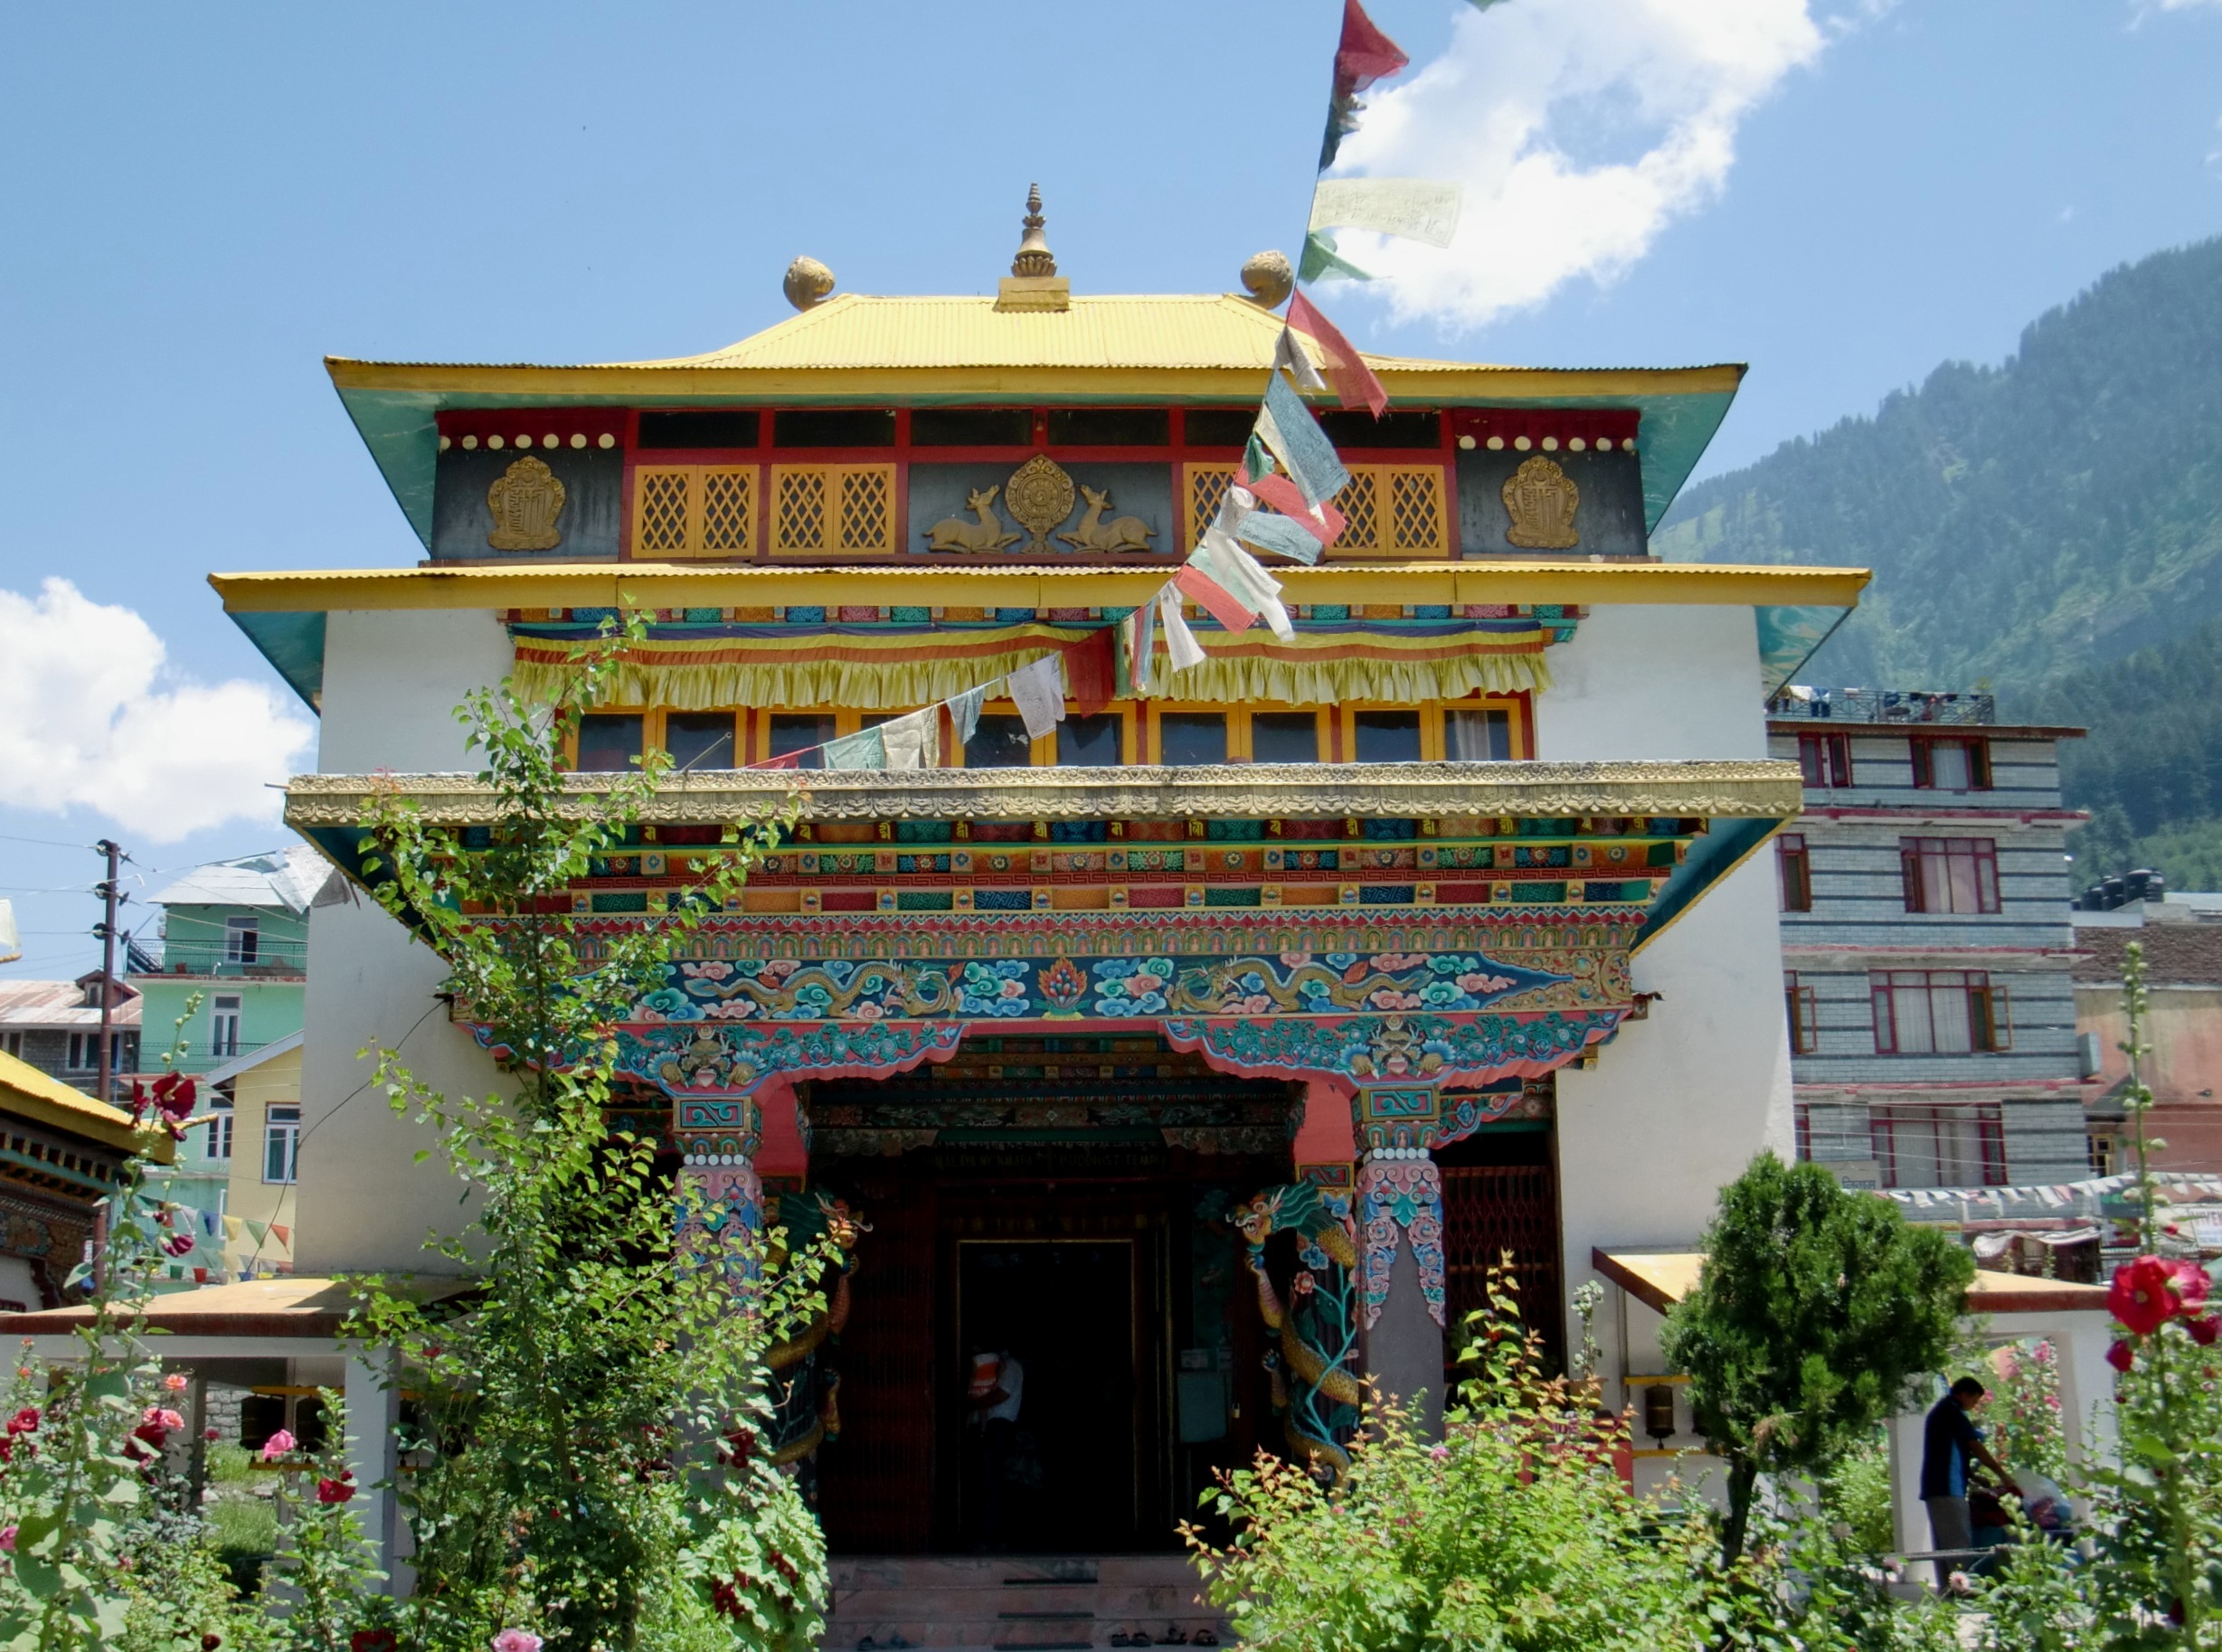 File:Tibetan temple at Manali.jpg - Wikimedia Commons